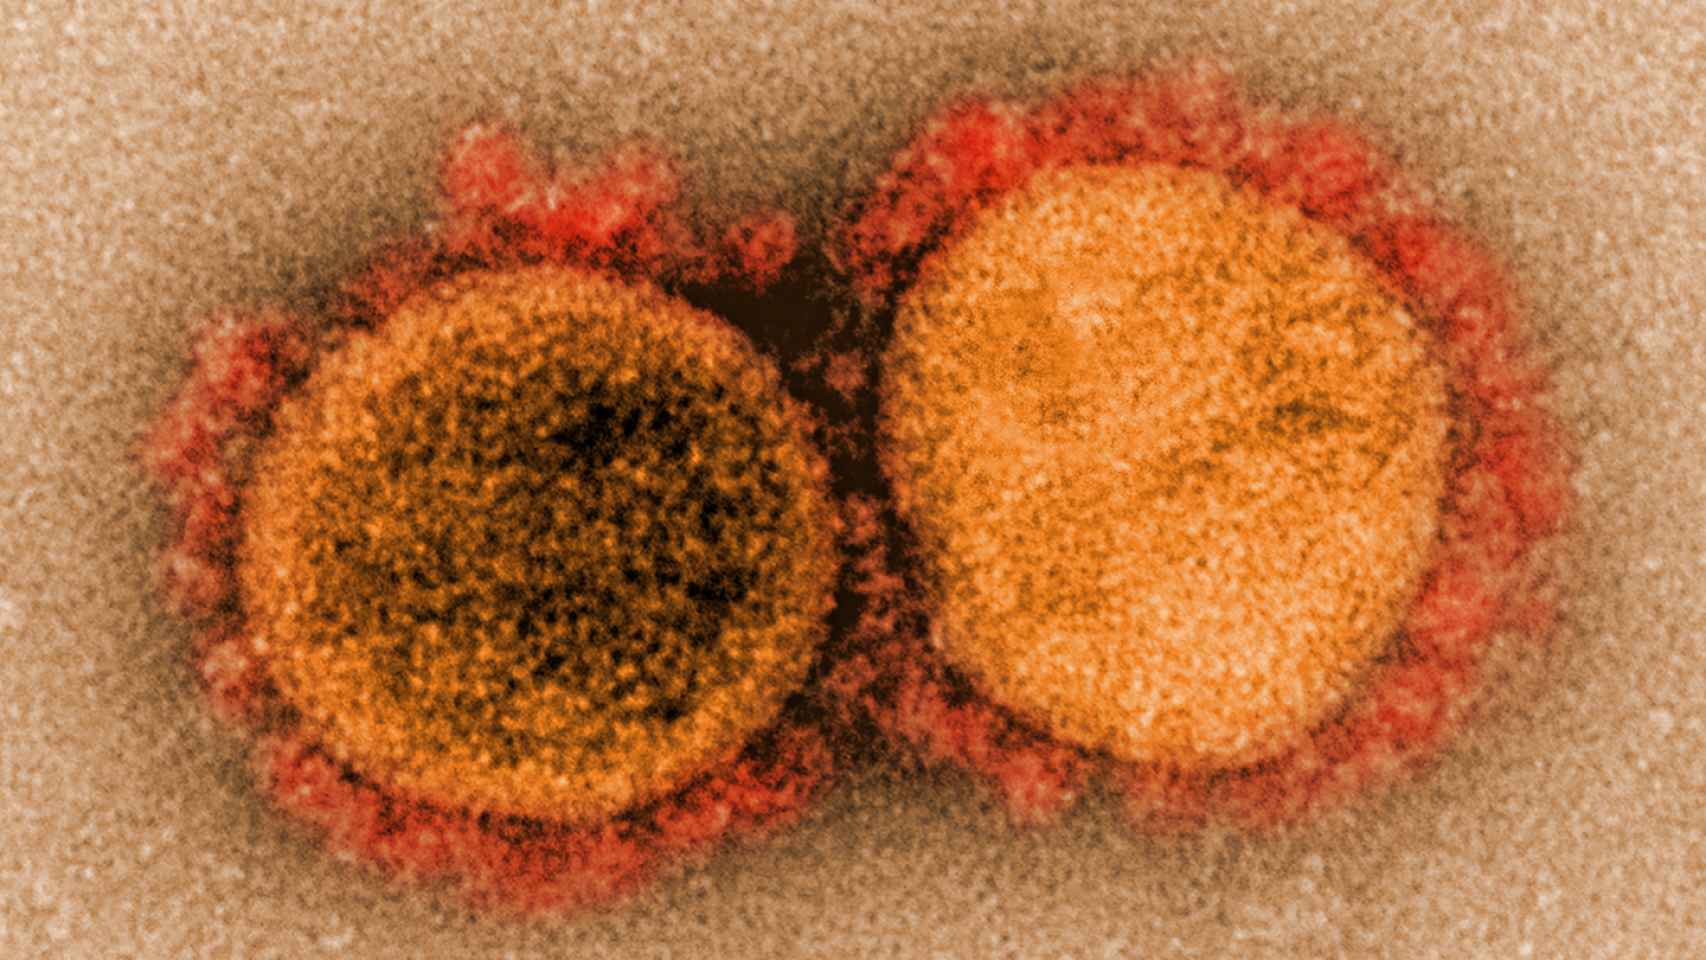 El coronavirus SARS-CoV-2